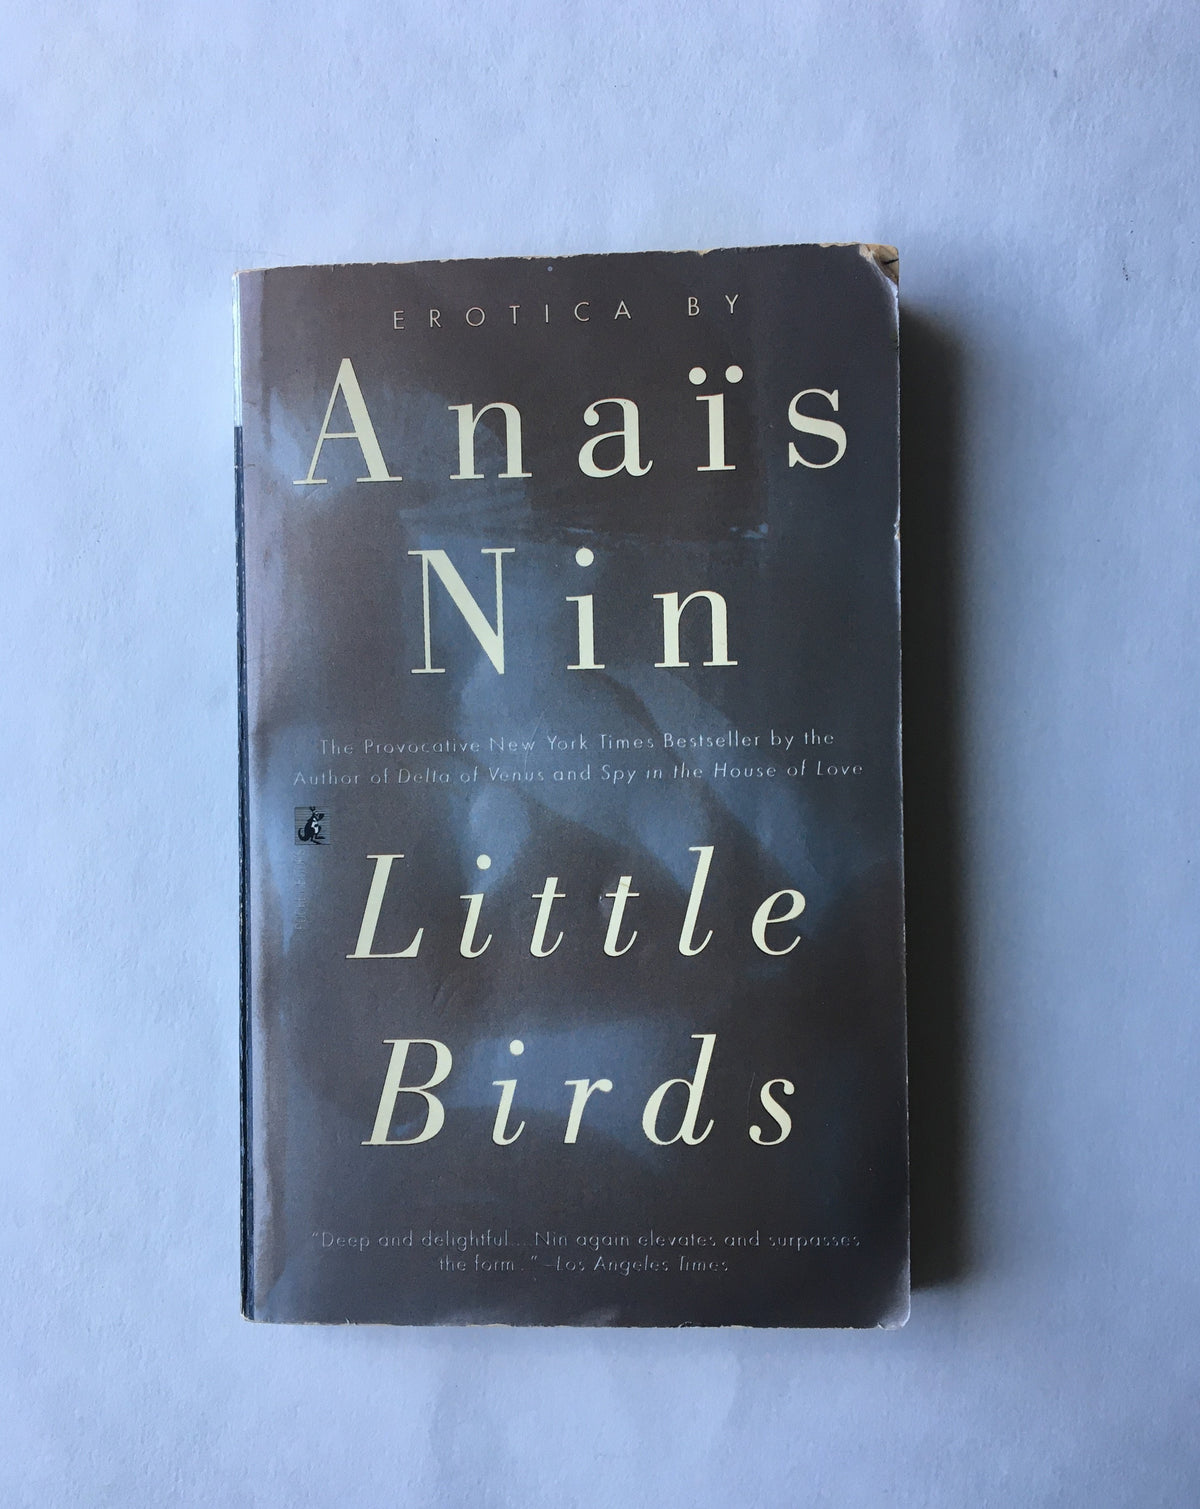 Little Birds by Anais Nin